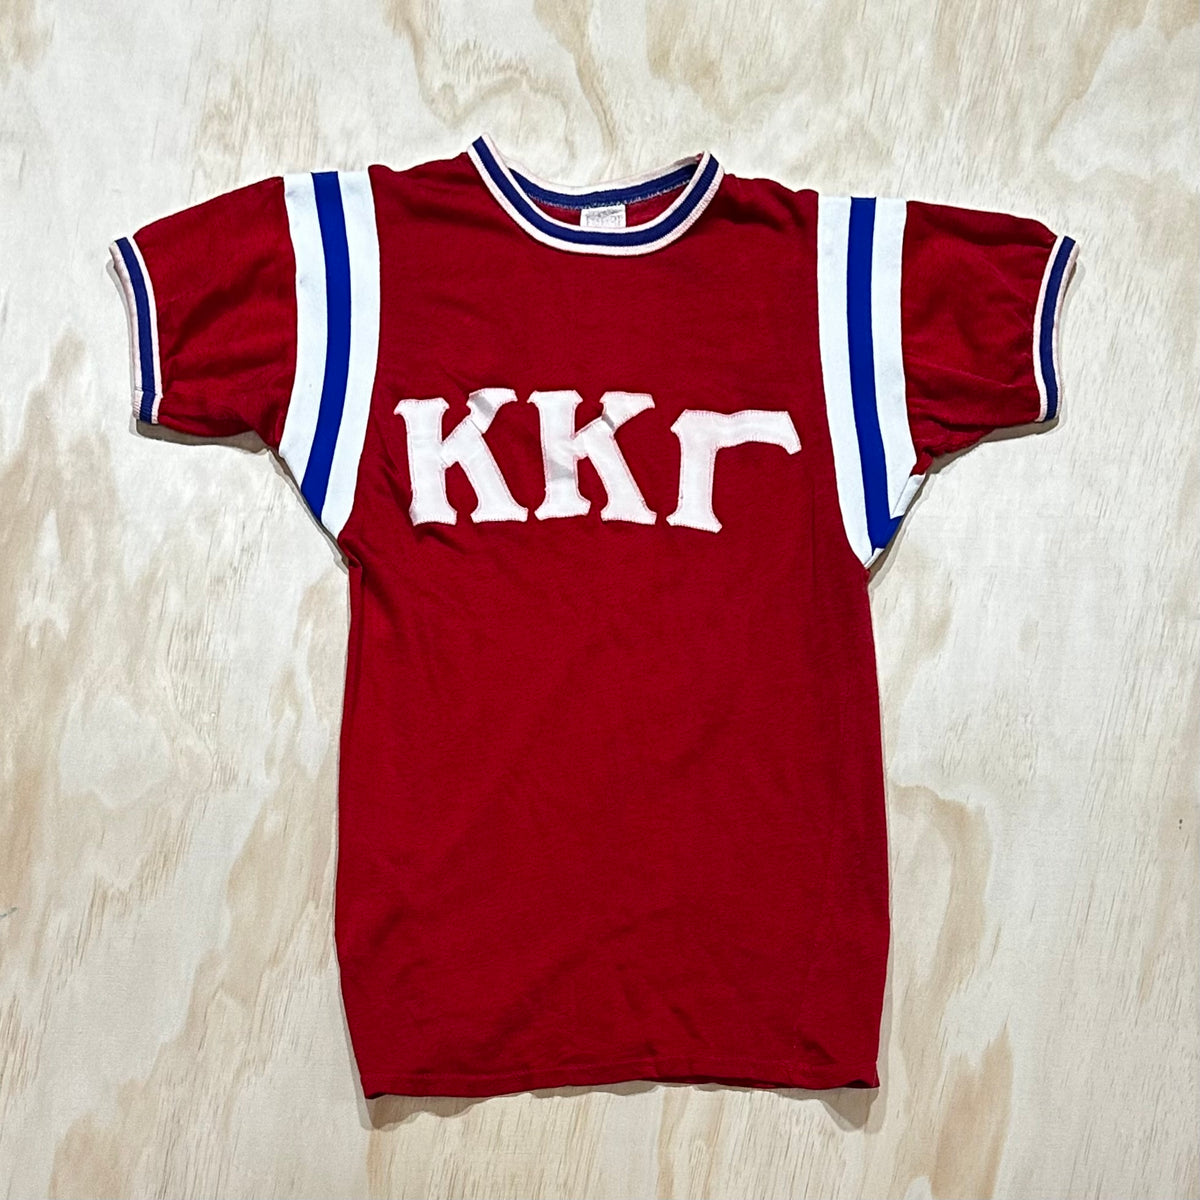 Vintage 50s 60s Fraternity shirt